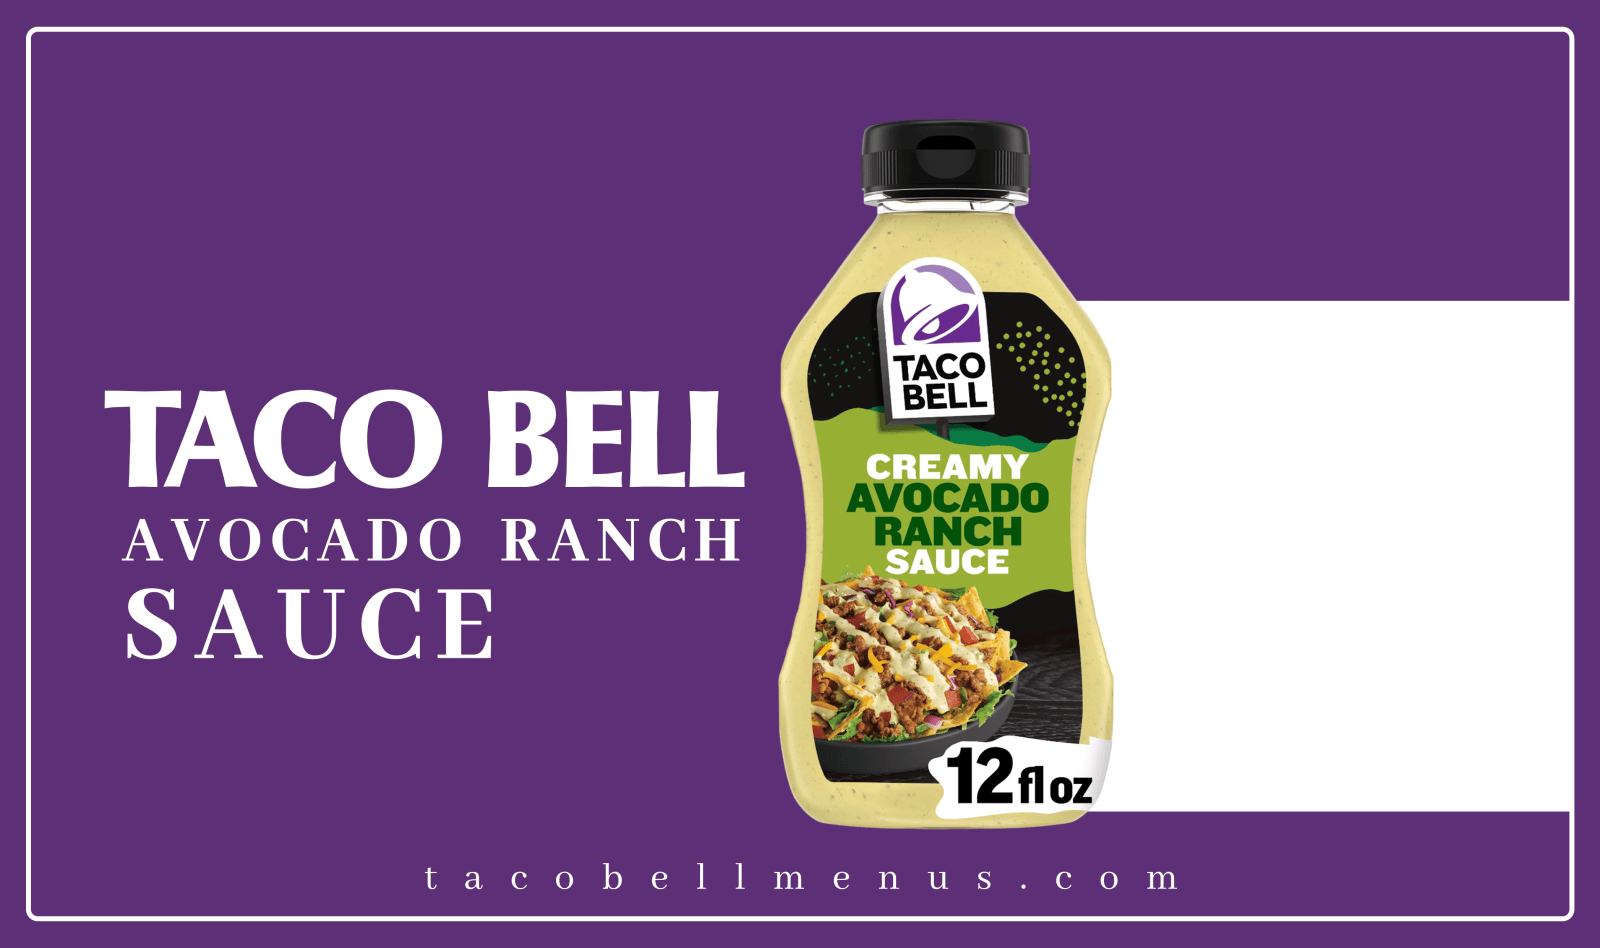 Taco Bell Avocado Ranch Sauce, Taco Bell menu, Taco Bell Avocado Ranch Sauce Nutrition, Taco Bell Avocado Ranch Sauce price, Taco Bell Avocado Ranch Sauce Recipe, Taco Bell flavors, Taco Bell dips